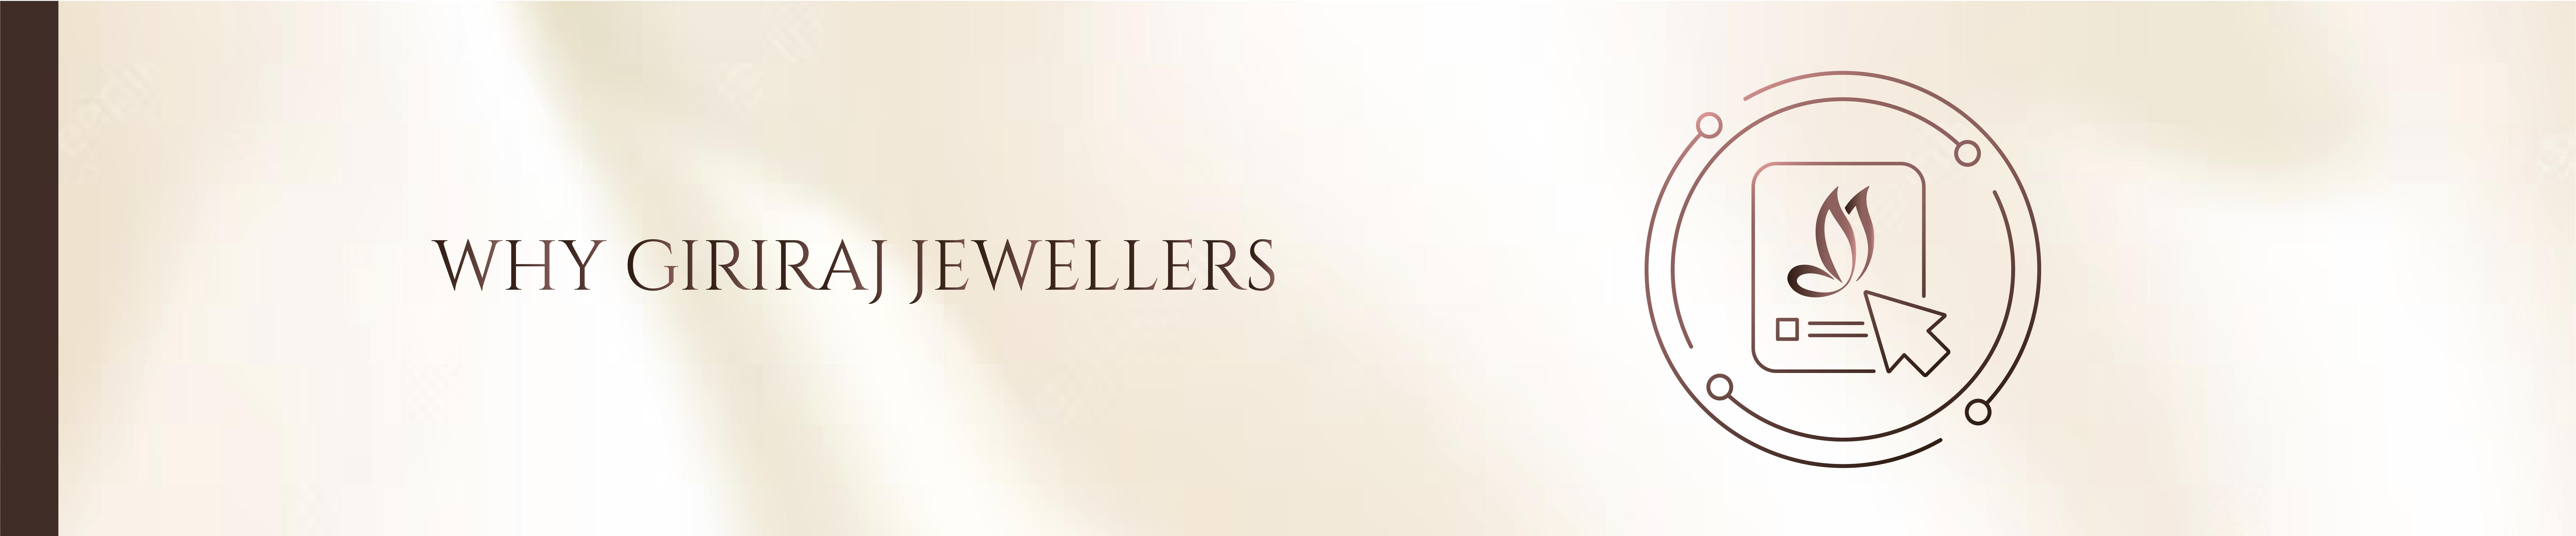 Giriraj Jewellers Why Giriraj Jewellers Page Banner